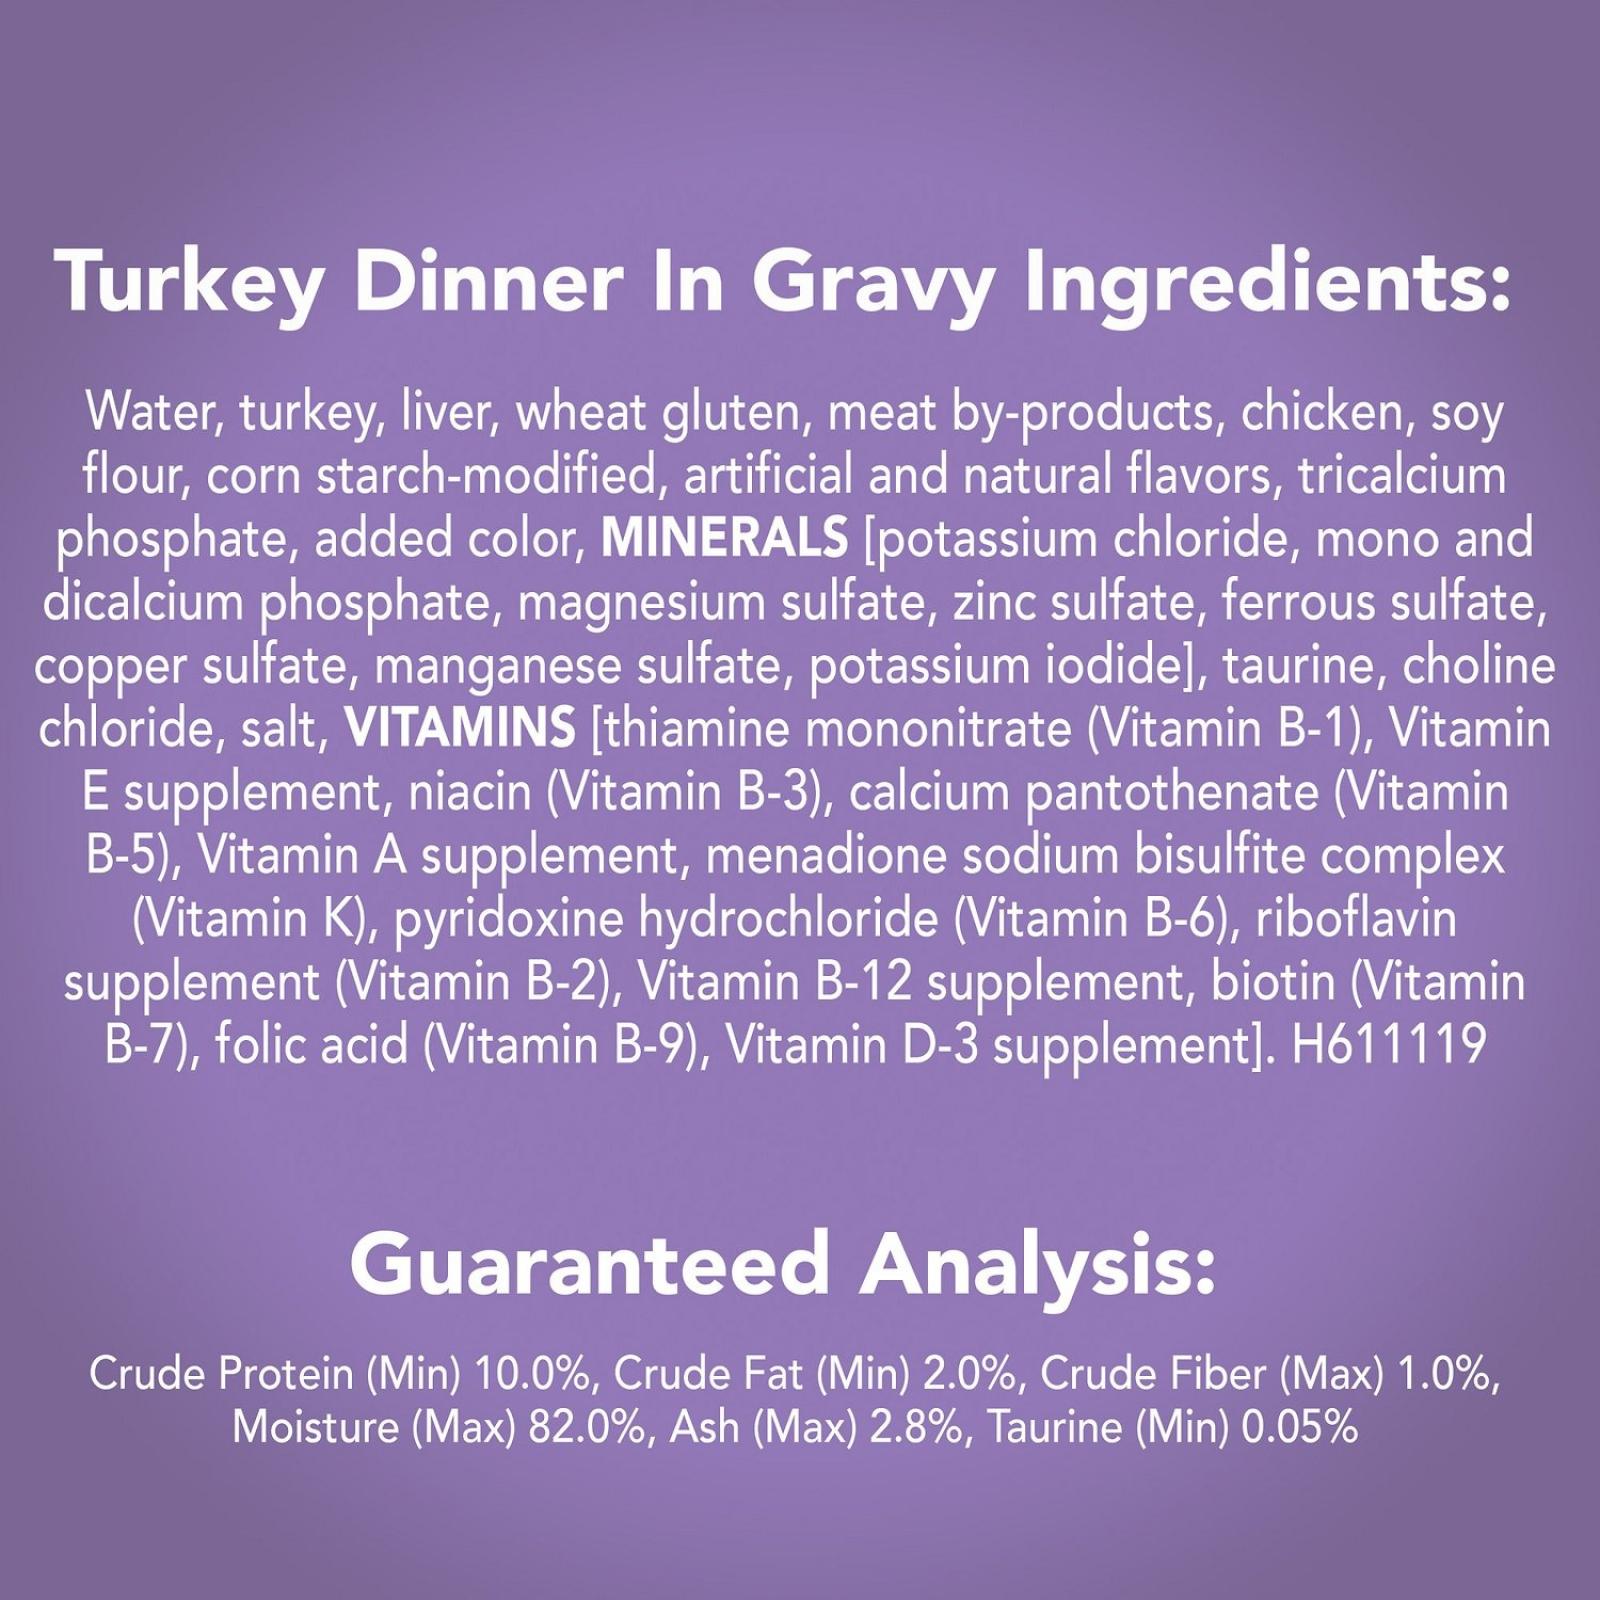 Purina Friskies Prime Filets Turkey Dinner in Gravy Canned Cat Food